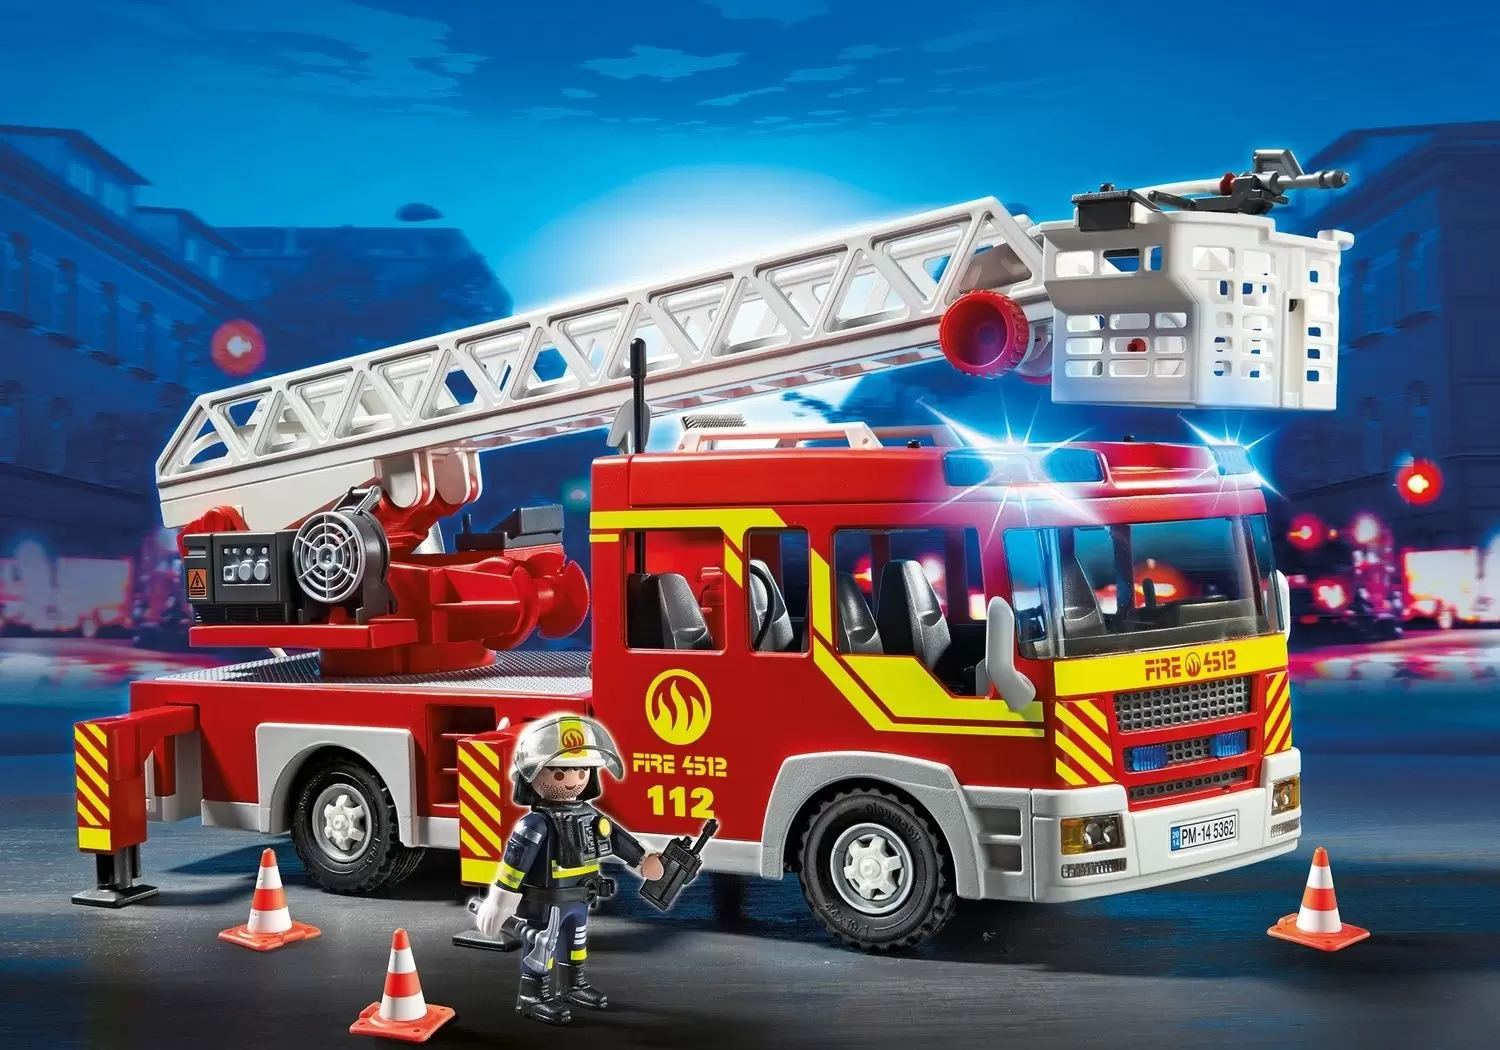 Ladder Lights and Sound - Playmobil Firemen 5362